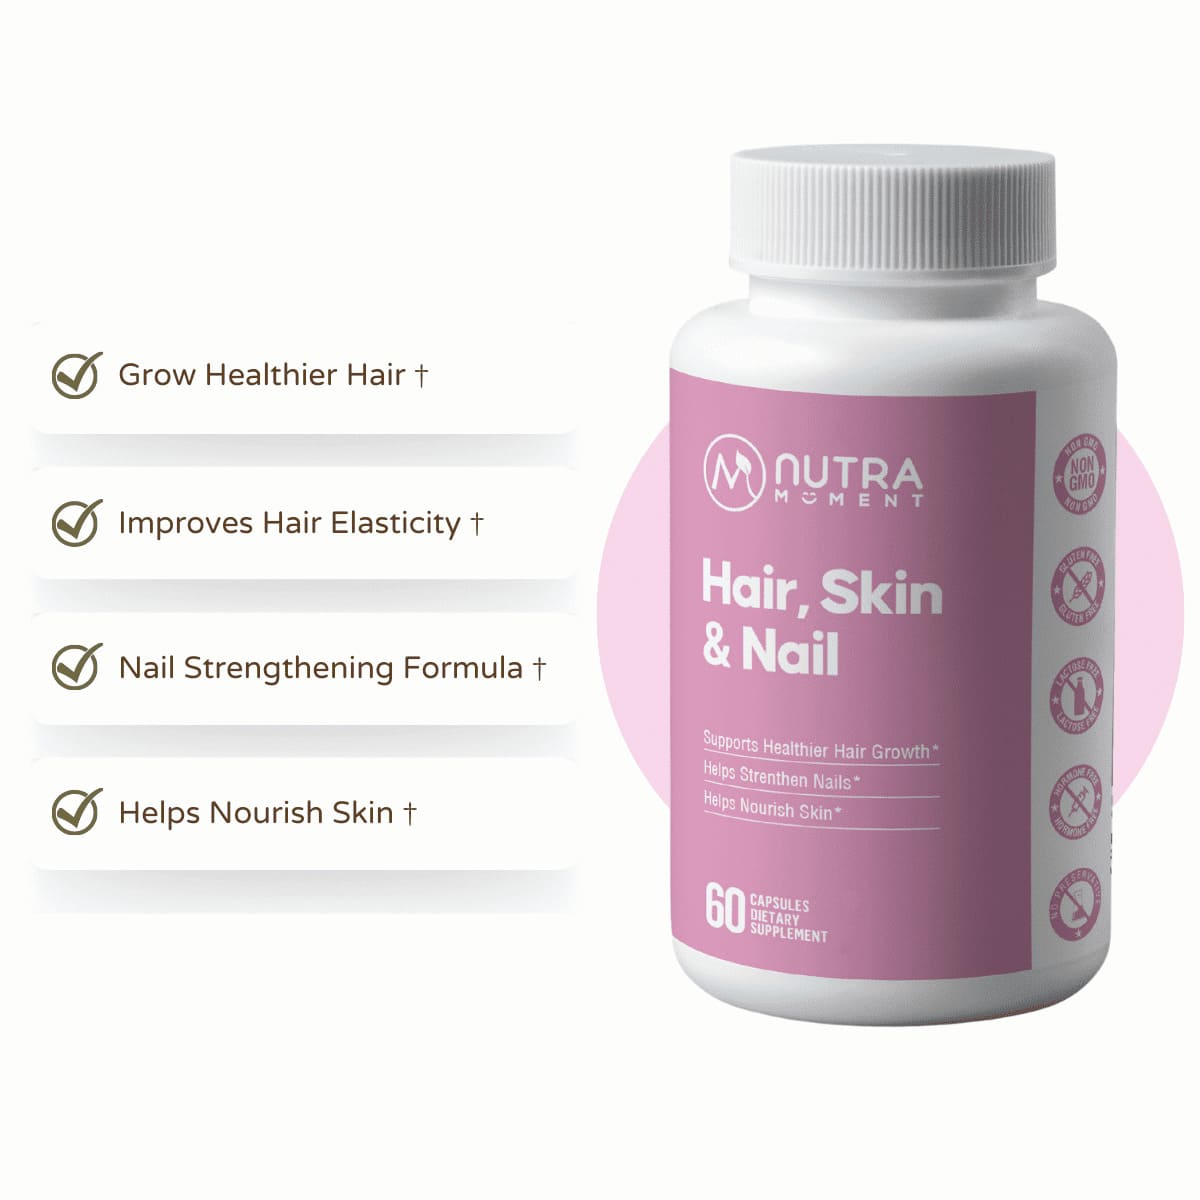 Nutra Moment |Hair, Skin & Nail | Product Highlights & Benefits